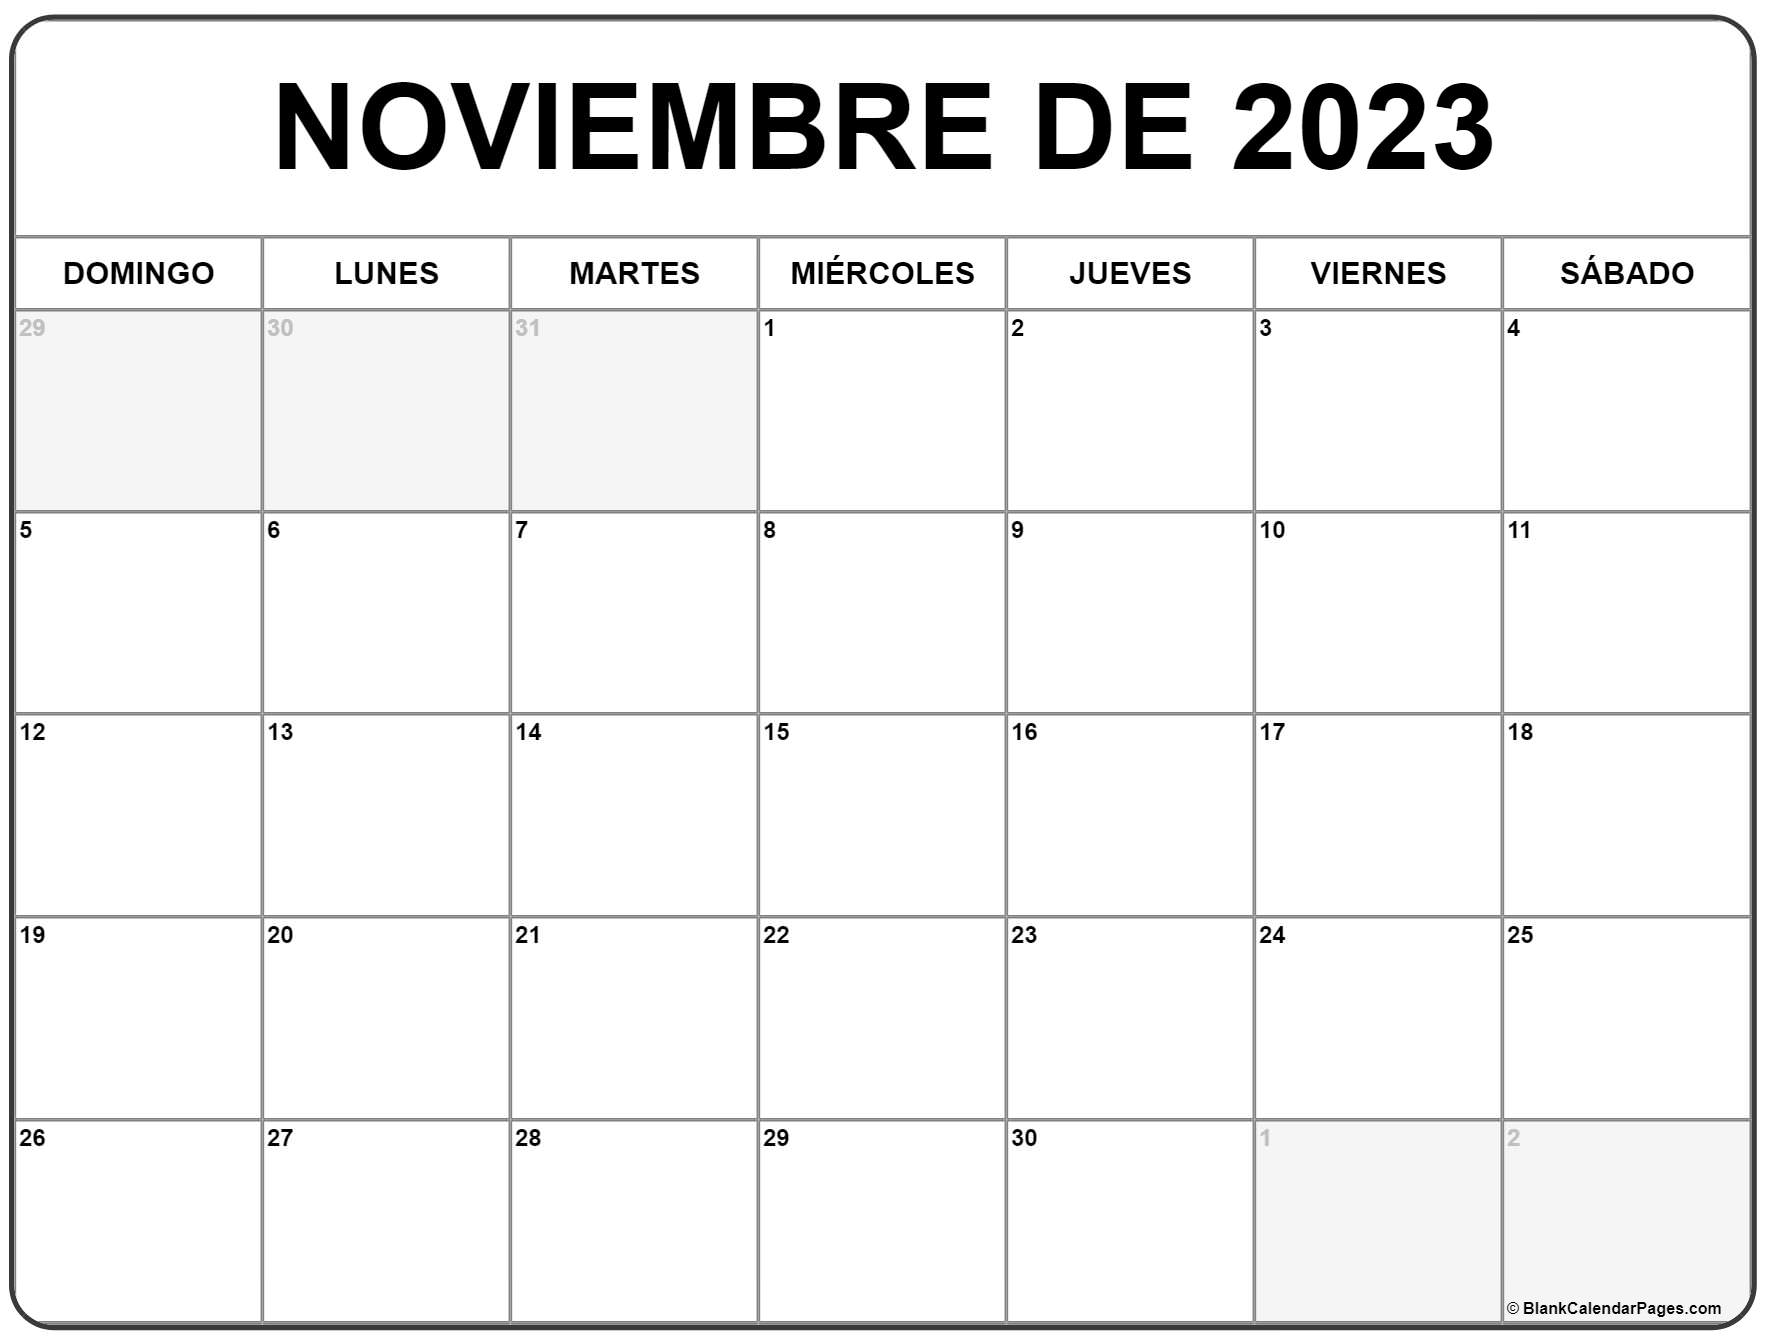 Calendario 2023 noviembre para imprimir